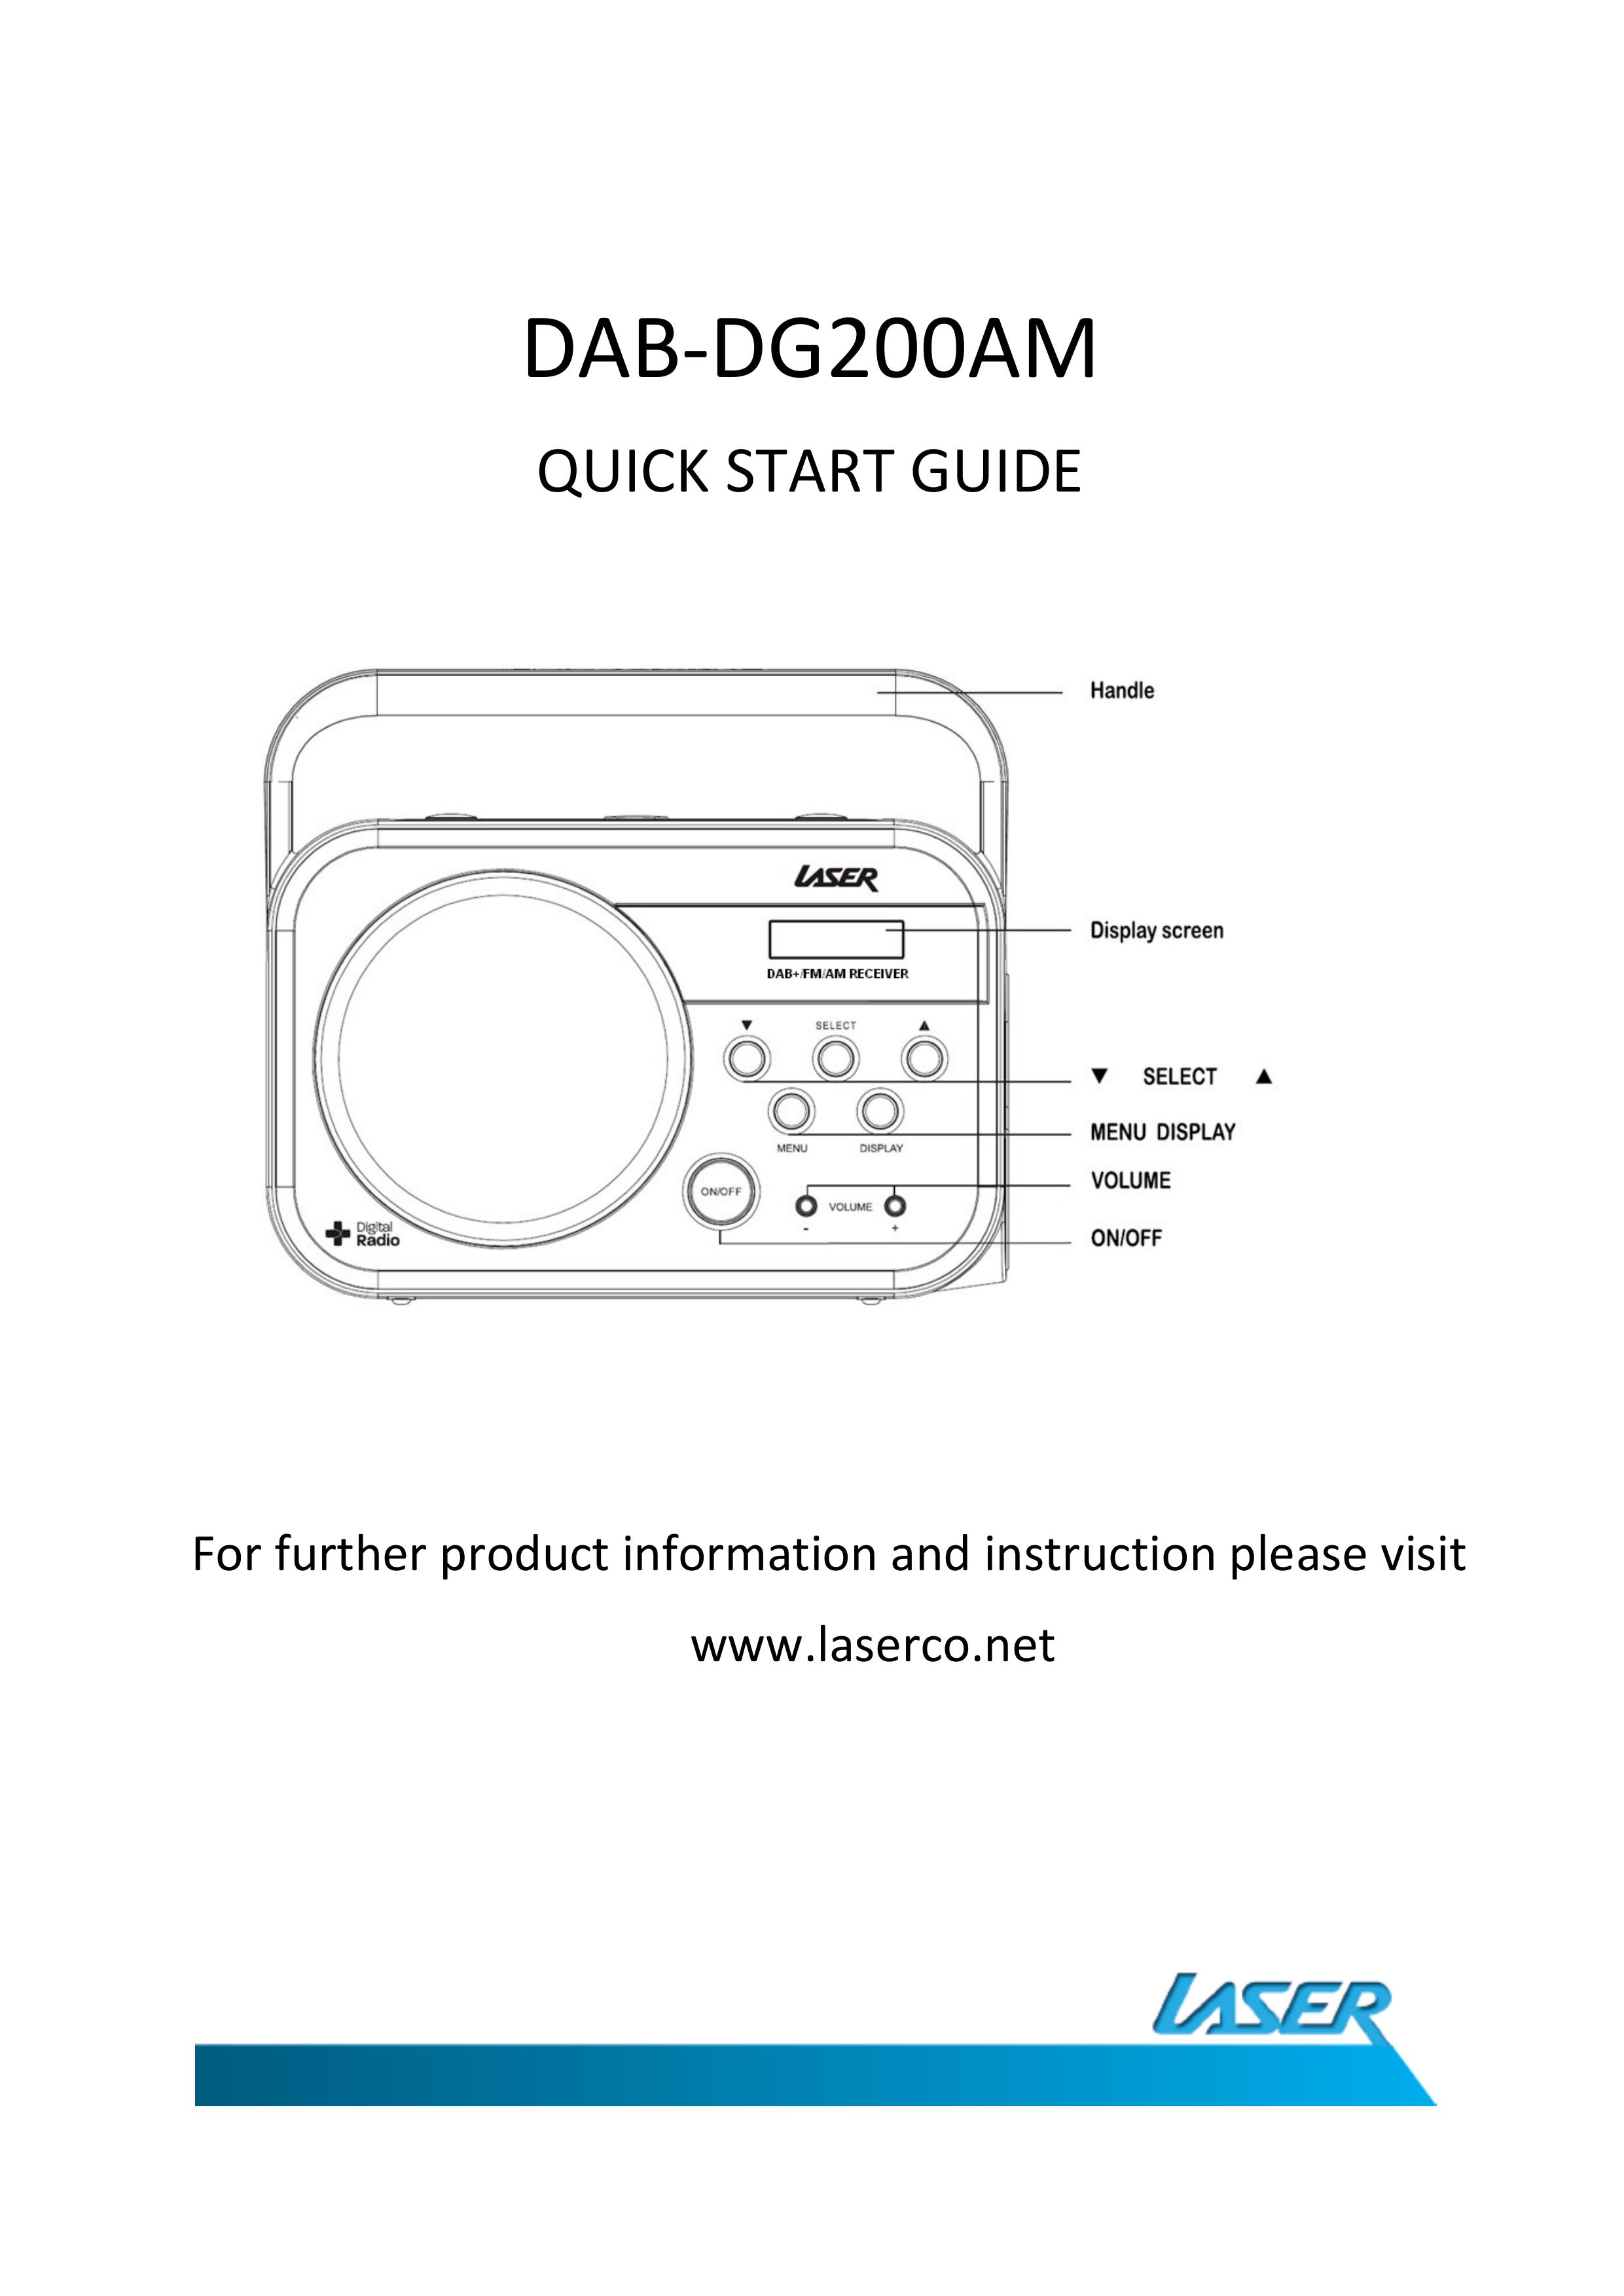 Laser DAB-DG200AM Clock Radio User Manual